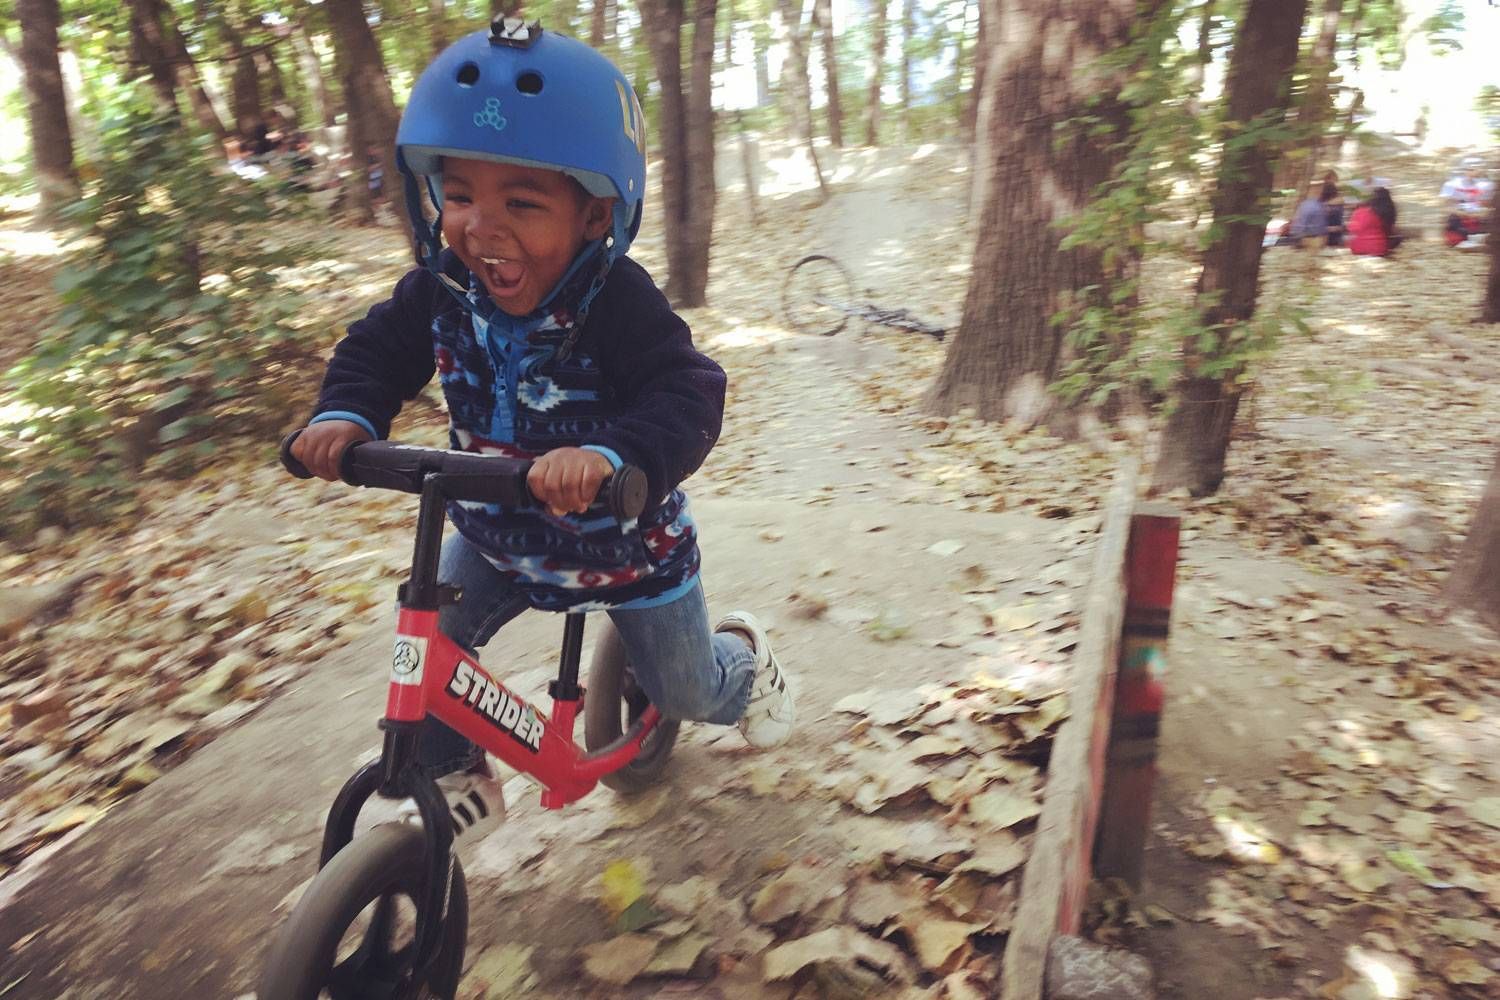 A boy rides a red Strider balance bike through the woods